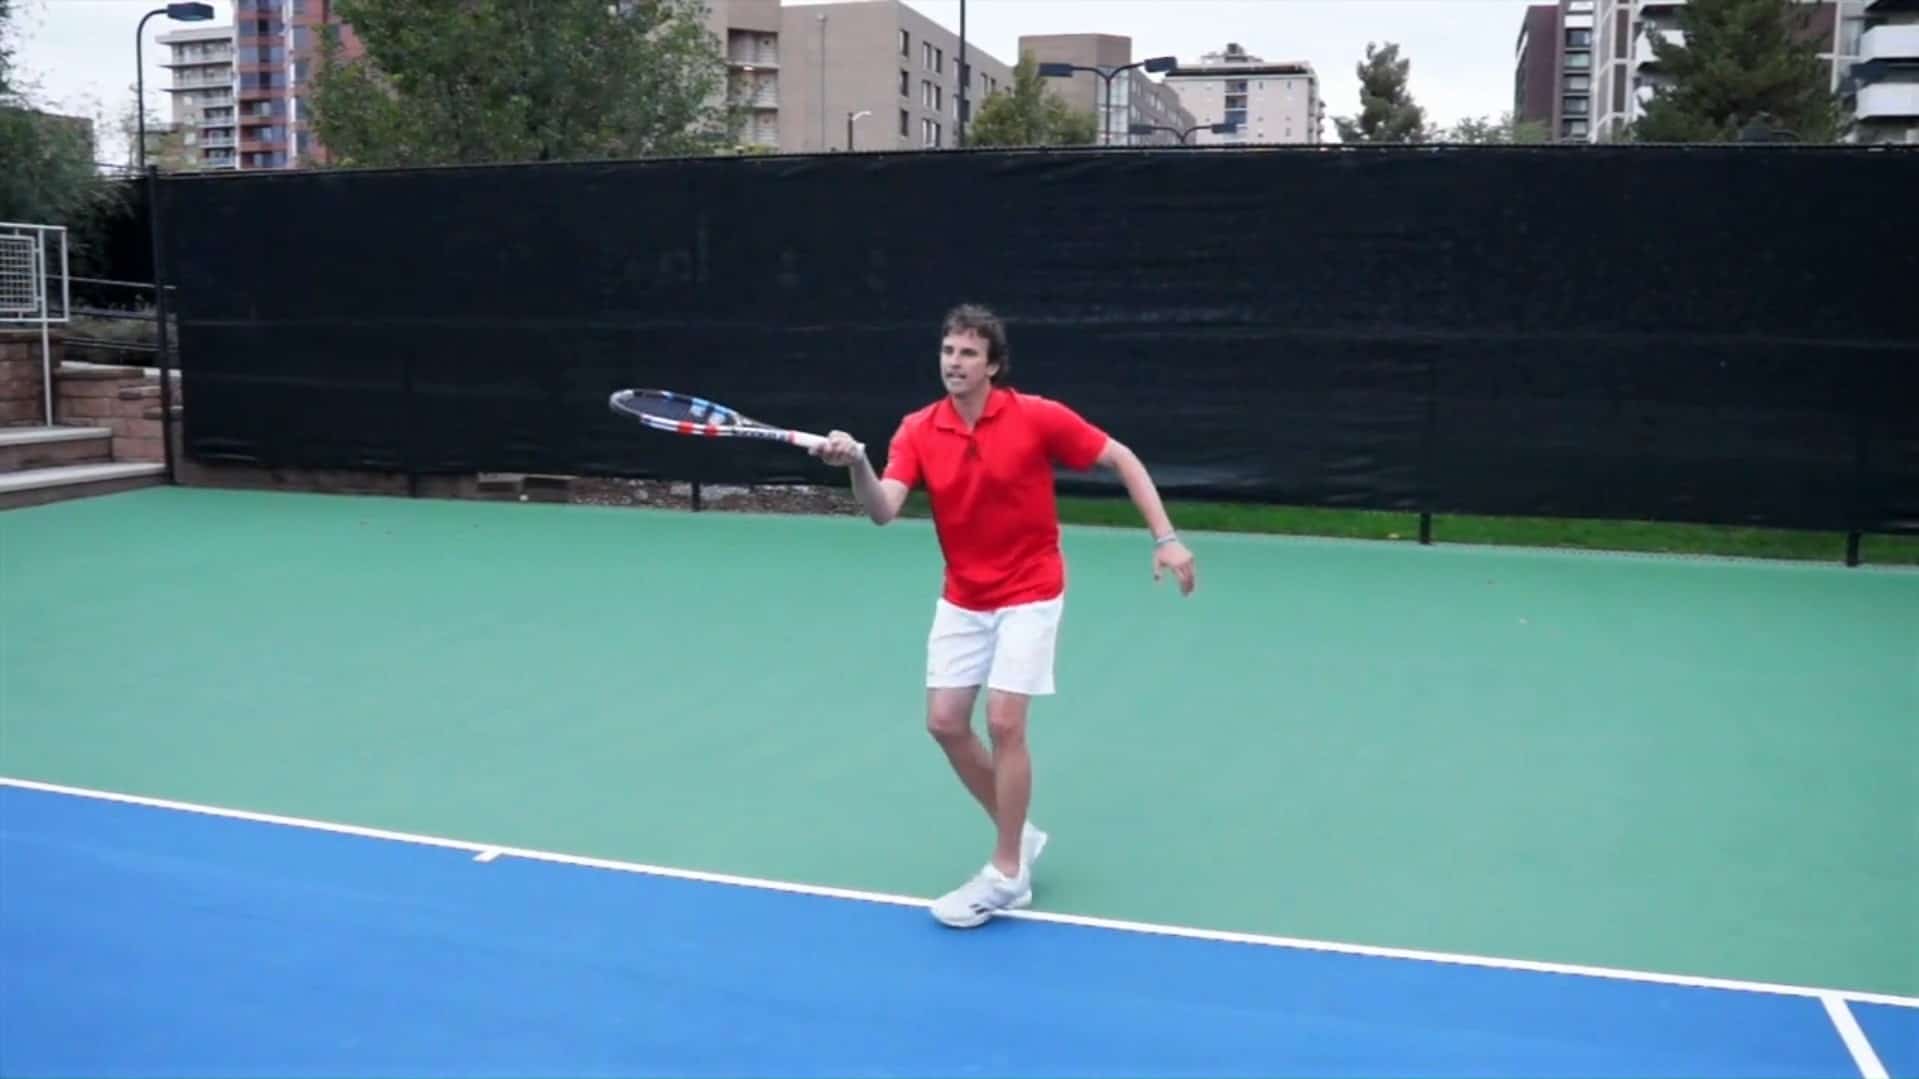 Jeff Salzenstein demonstrating the finish of a forehand drop shot tennis follow through.